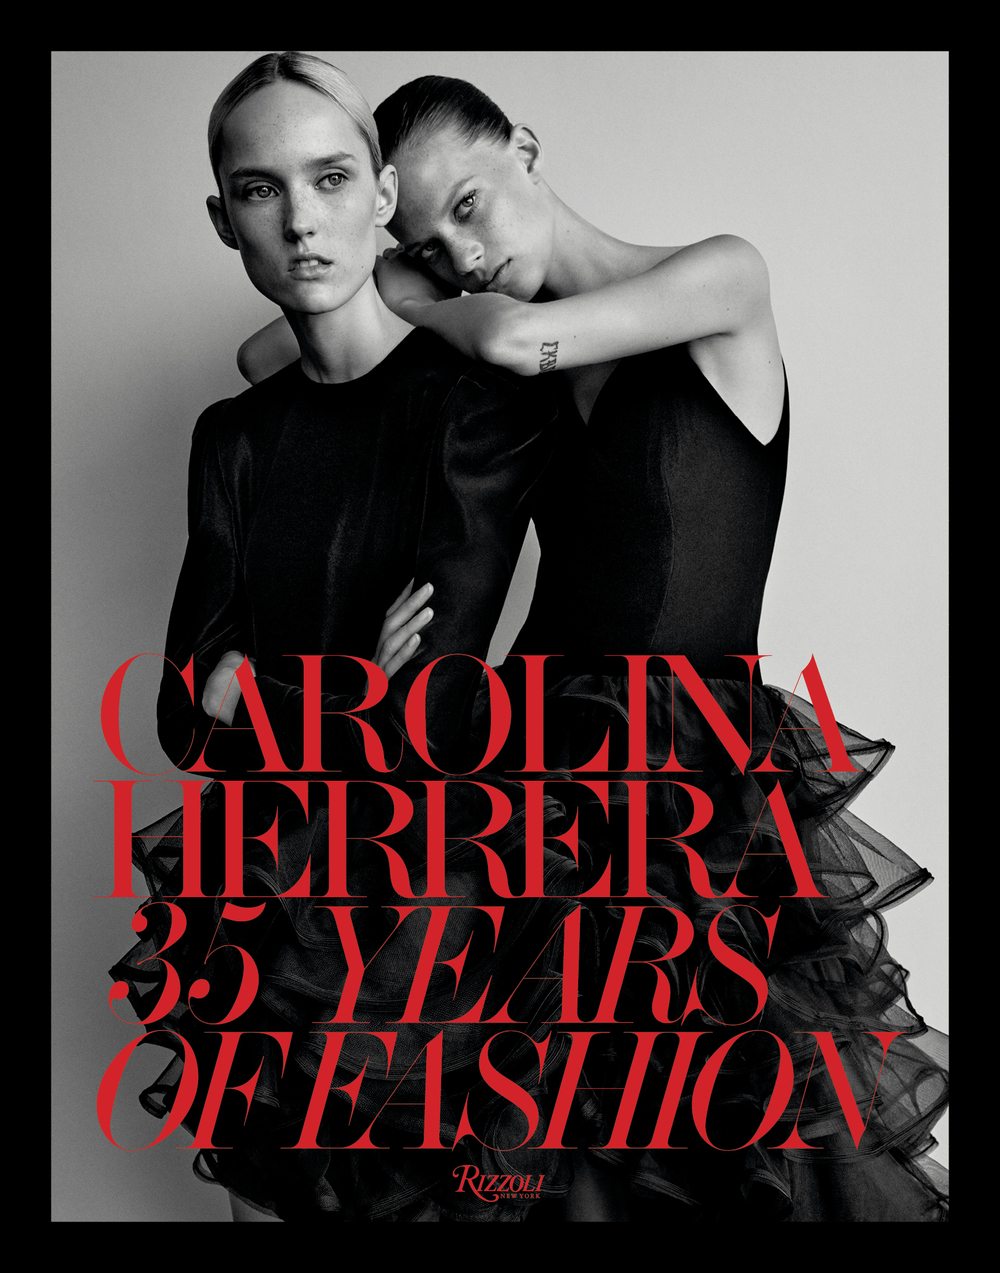 Book of the Week – Carolina Herrera, 35 Years of Fashion